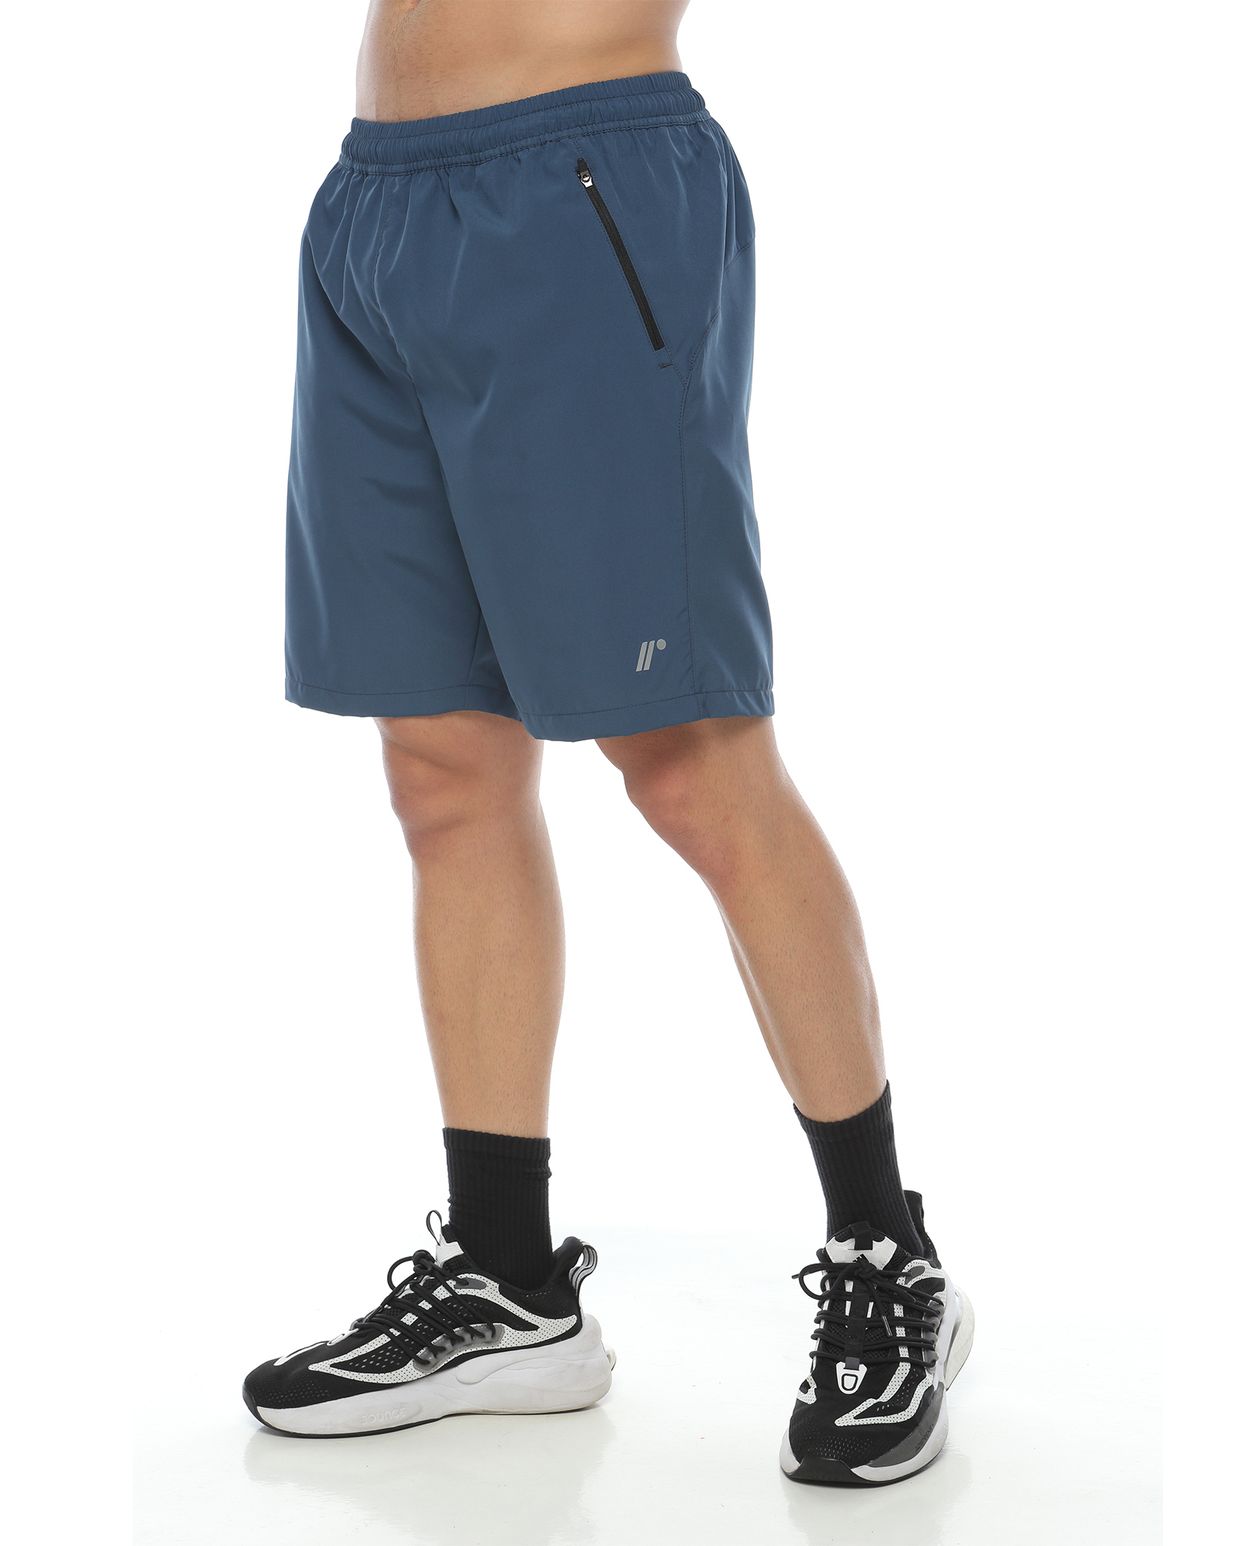 Pantaloneta deportiva hombre, color azul - racketball movil